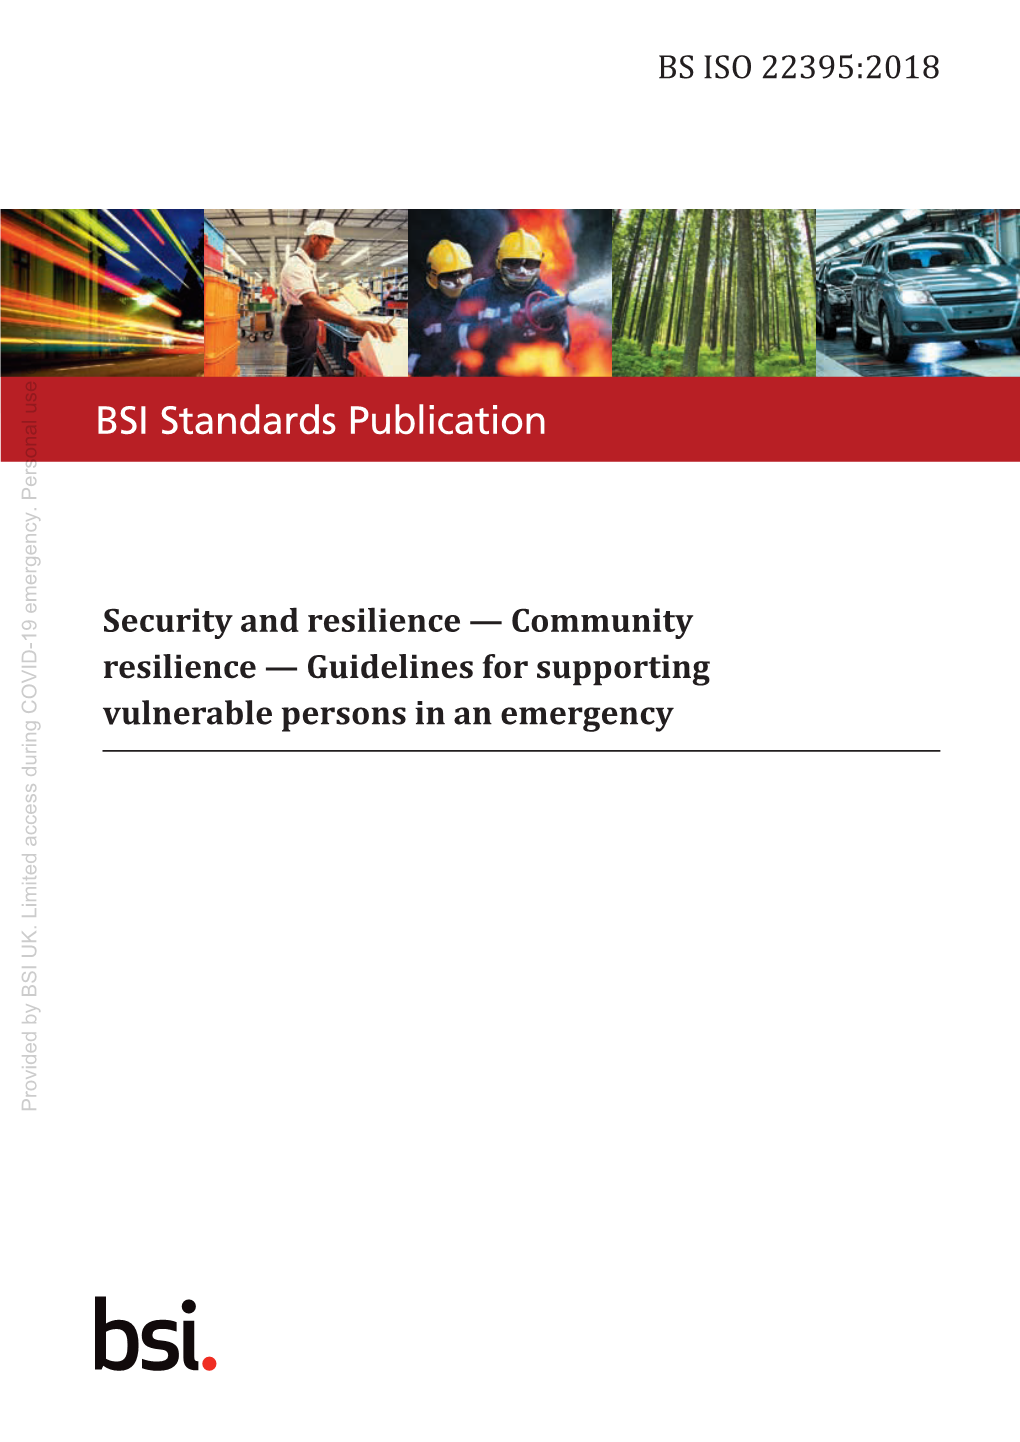 BSI Standards Publication Personal